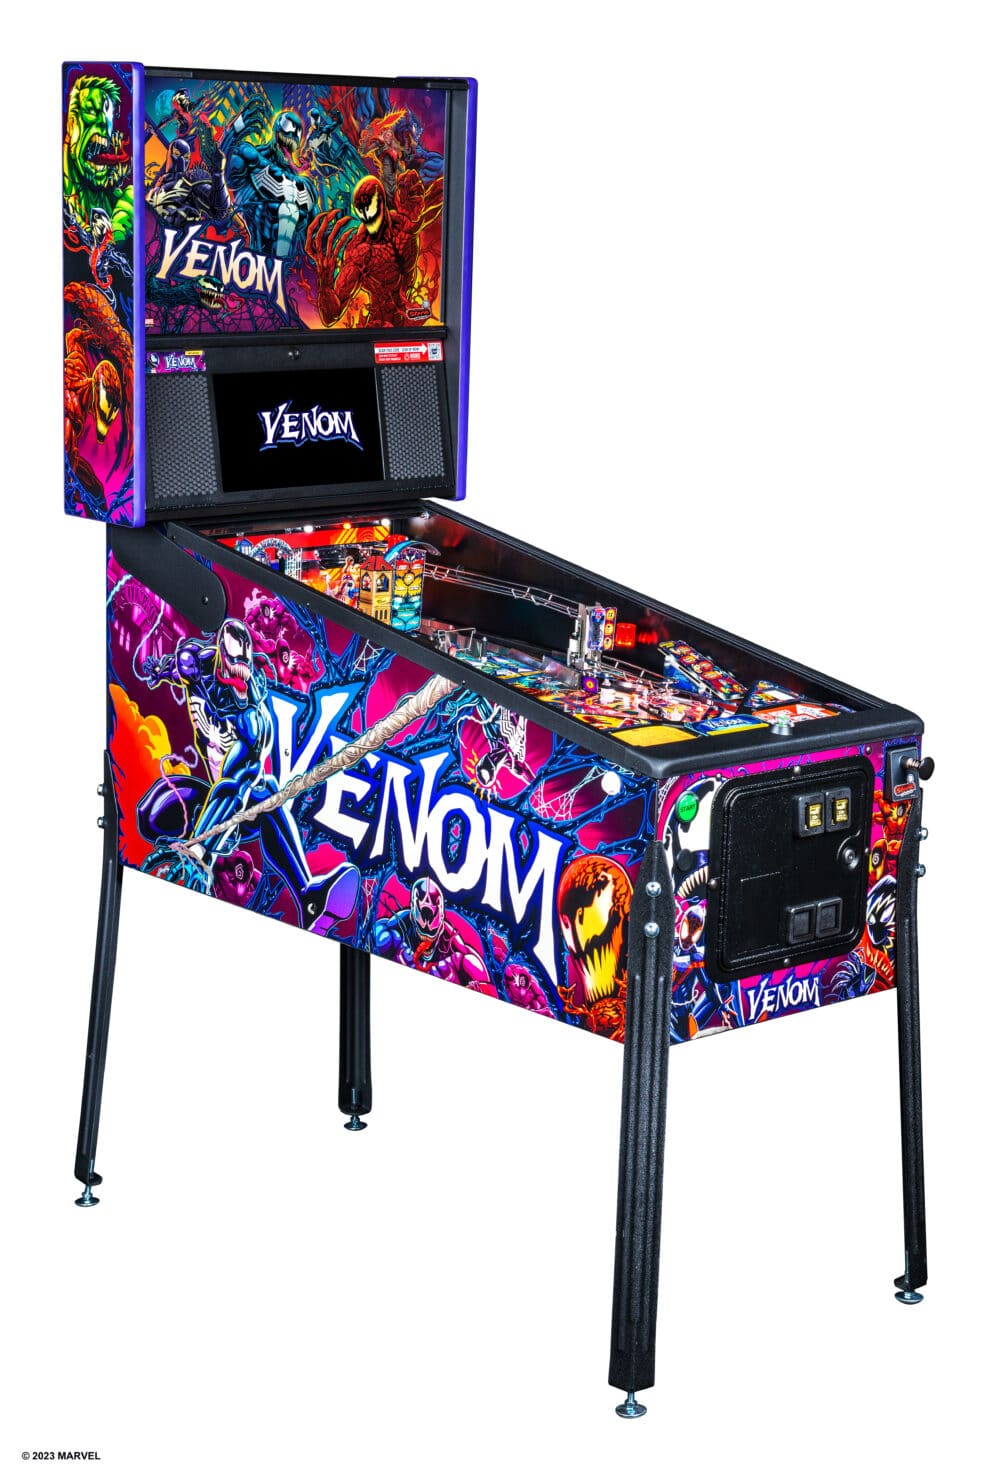 Venom Pro Edition Pinball